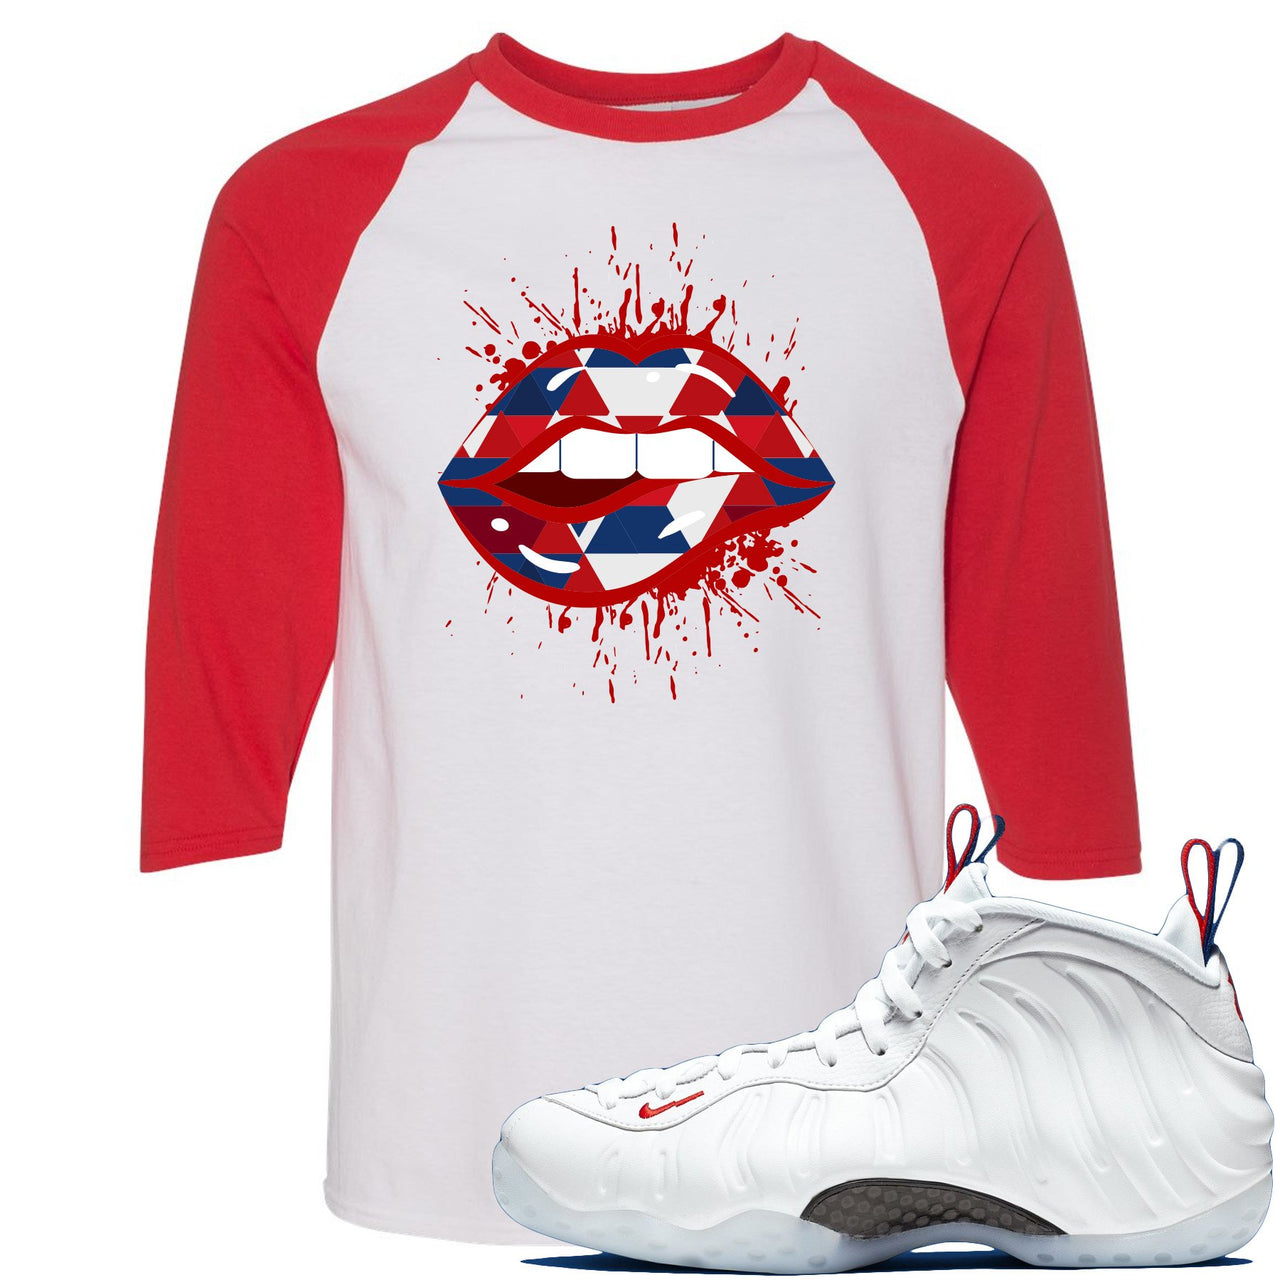 USA One Foams Raglan T Shirt | Geometric Lips Splatter, White and Red